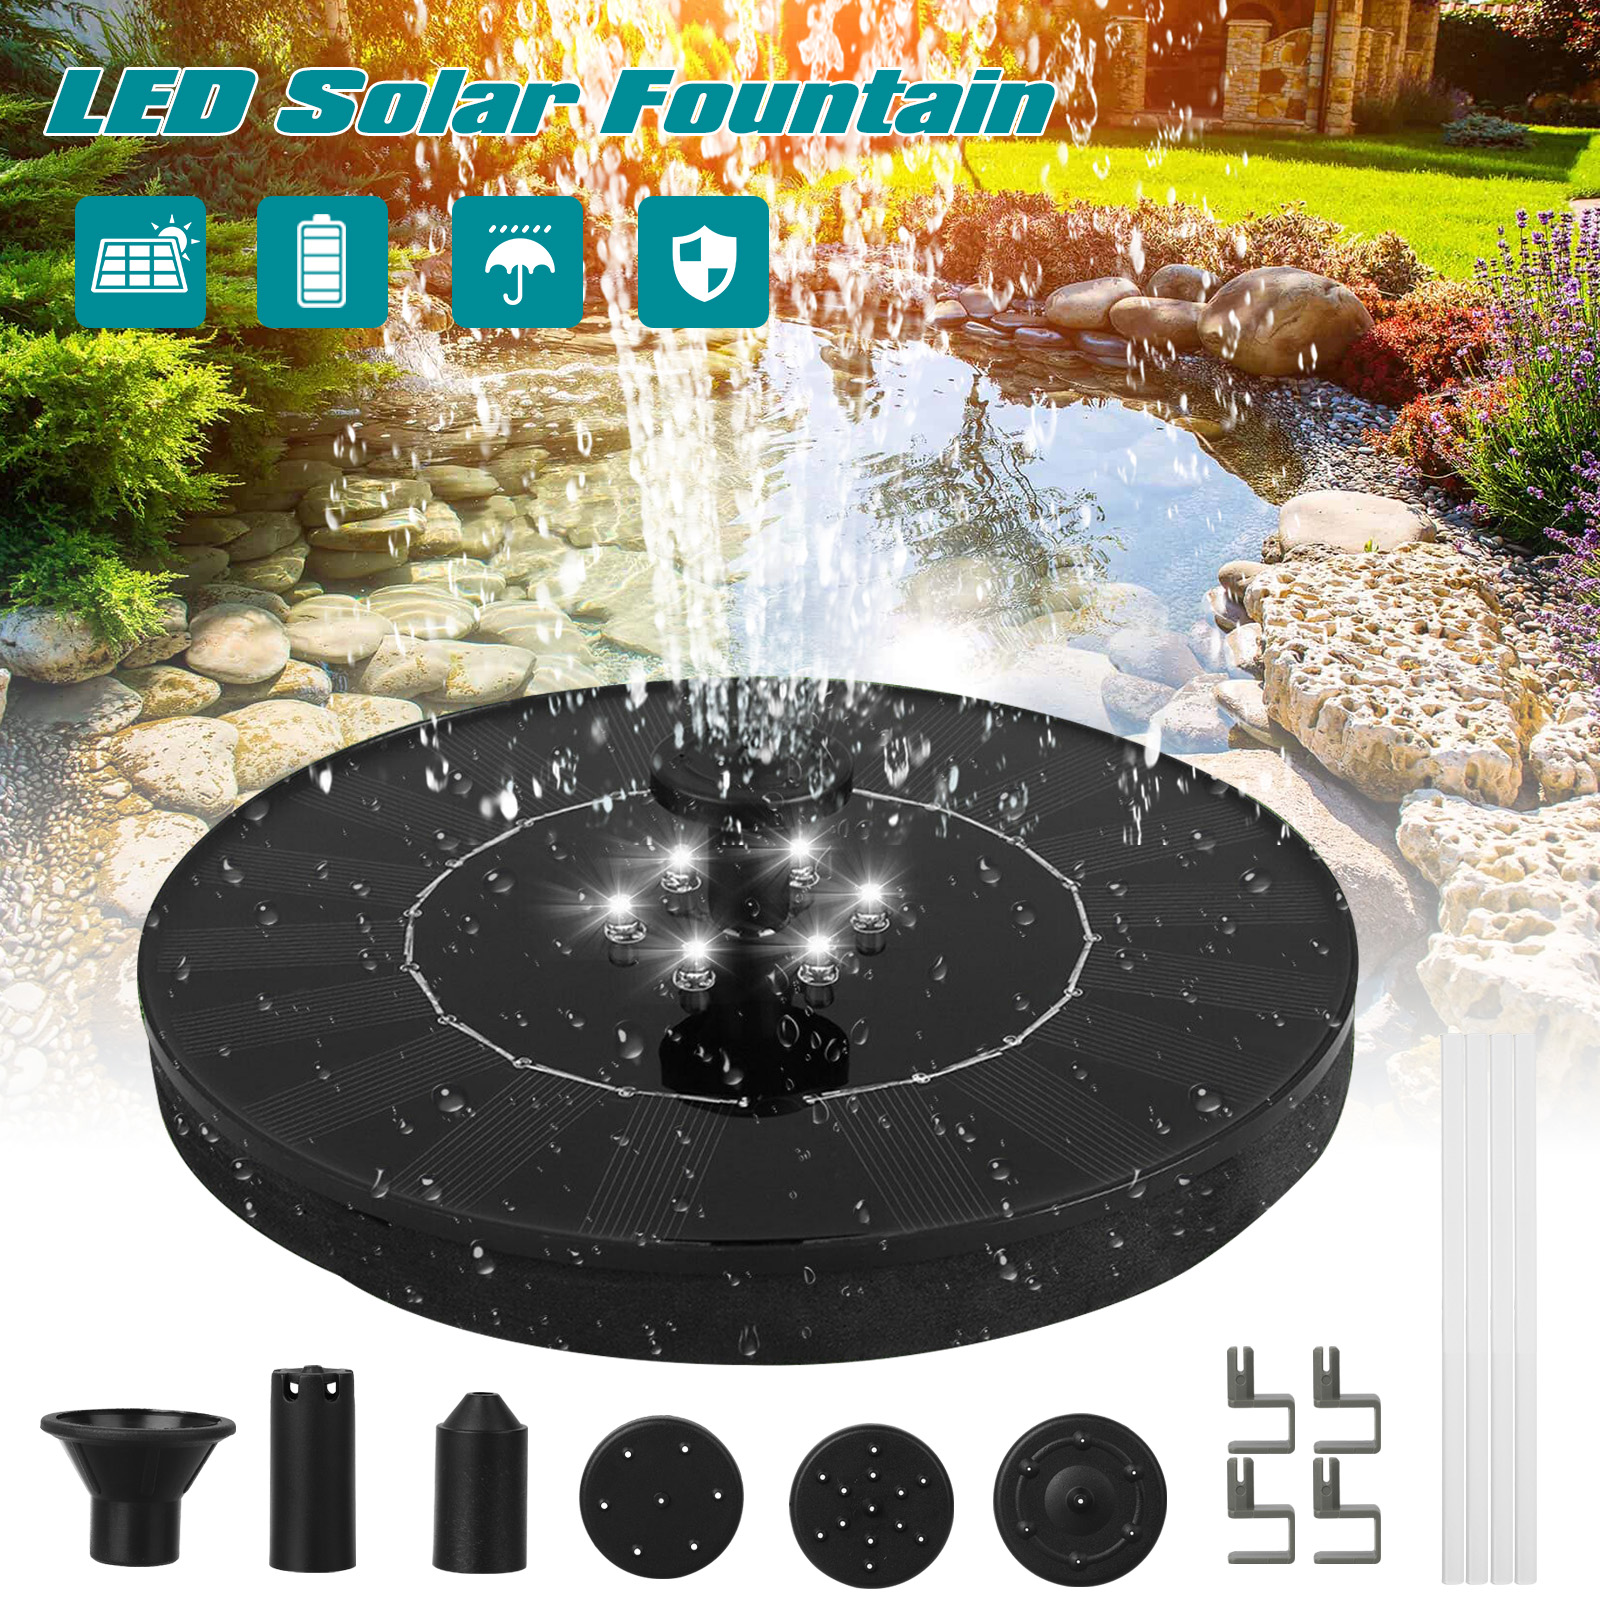 Details about   6 LED Lights Solar Powered Fountain Water Pump Night Floating Garden Bird Bath 